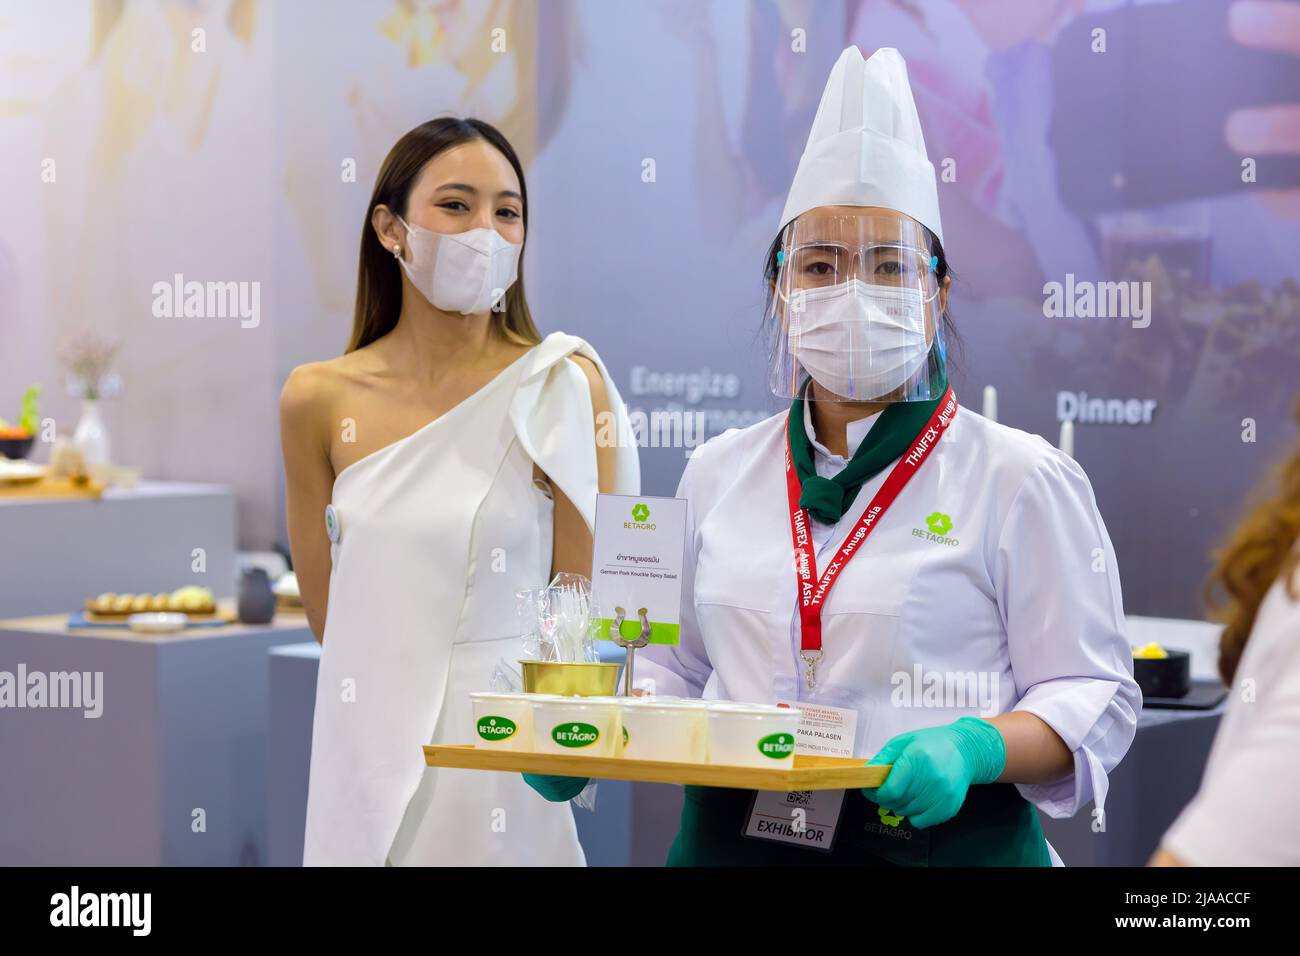 Lebensmittel-Produkte kostenlose Probe fördern Mädchen pritty Frau Modell zum Kunden zu Fuß in Food expo Festival Event Hall.25 Mai 2022.Bangkok, THAILAND. Stockfoto